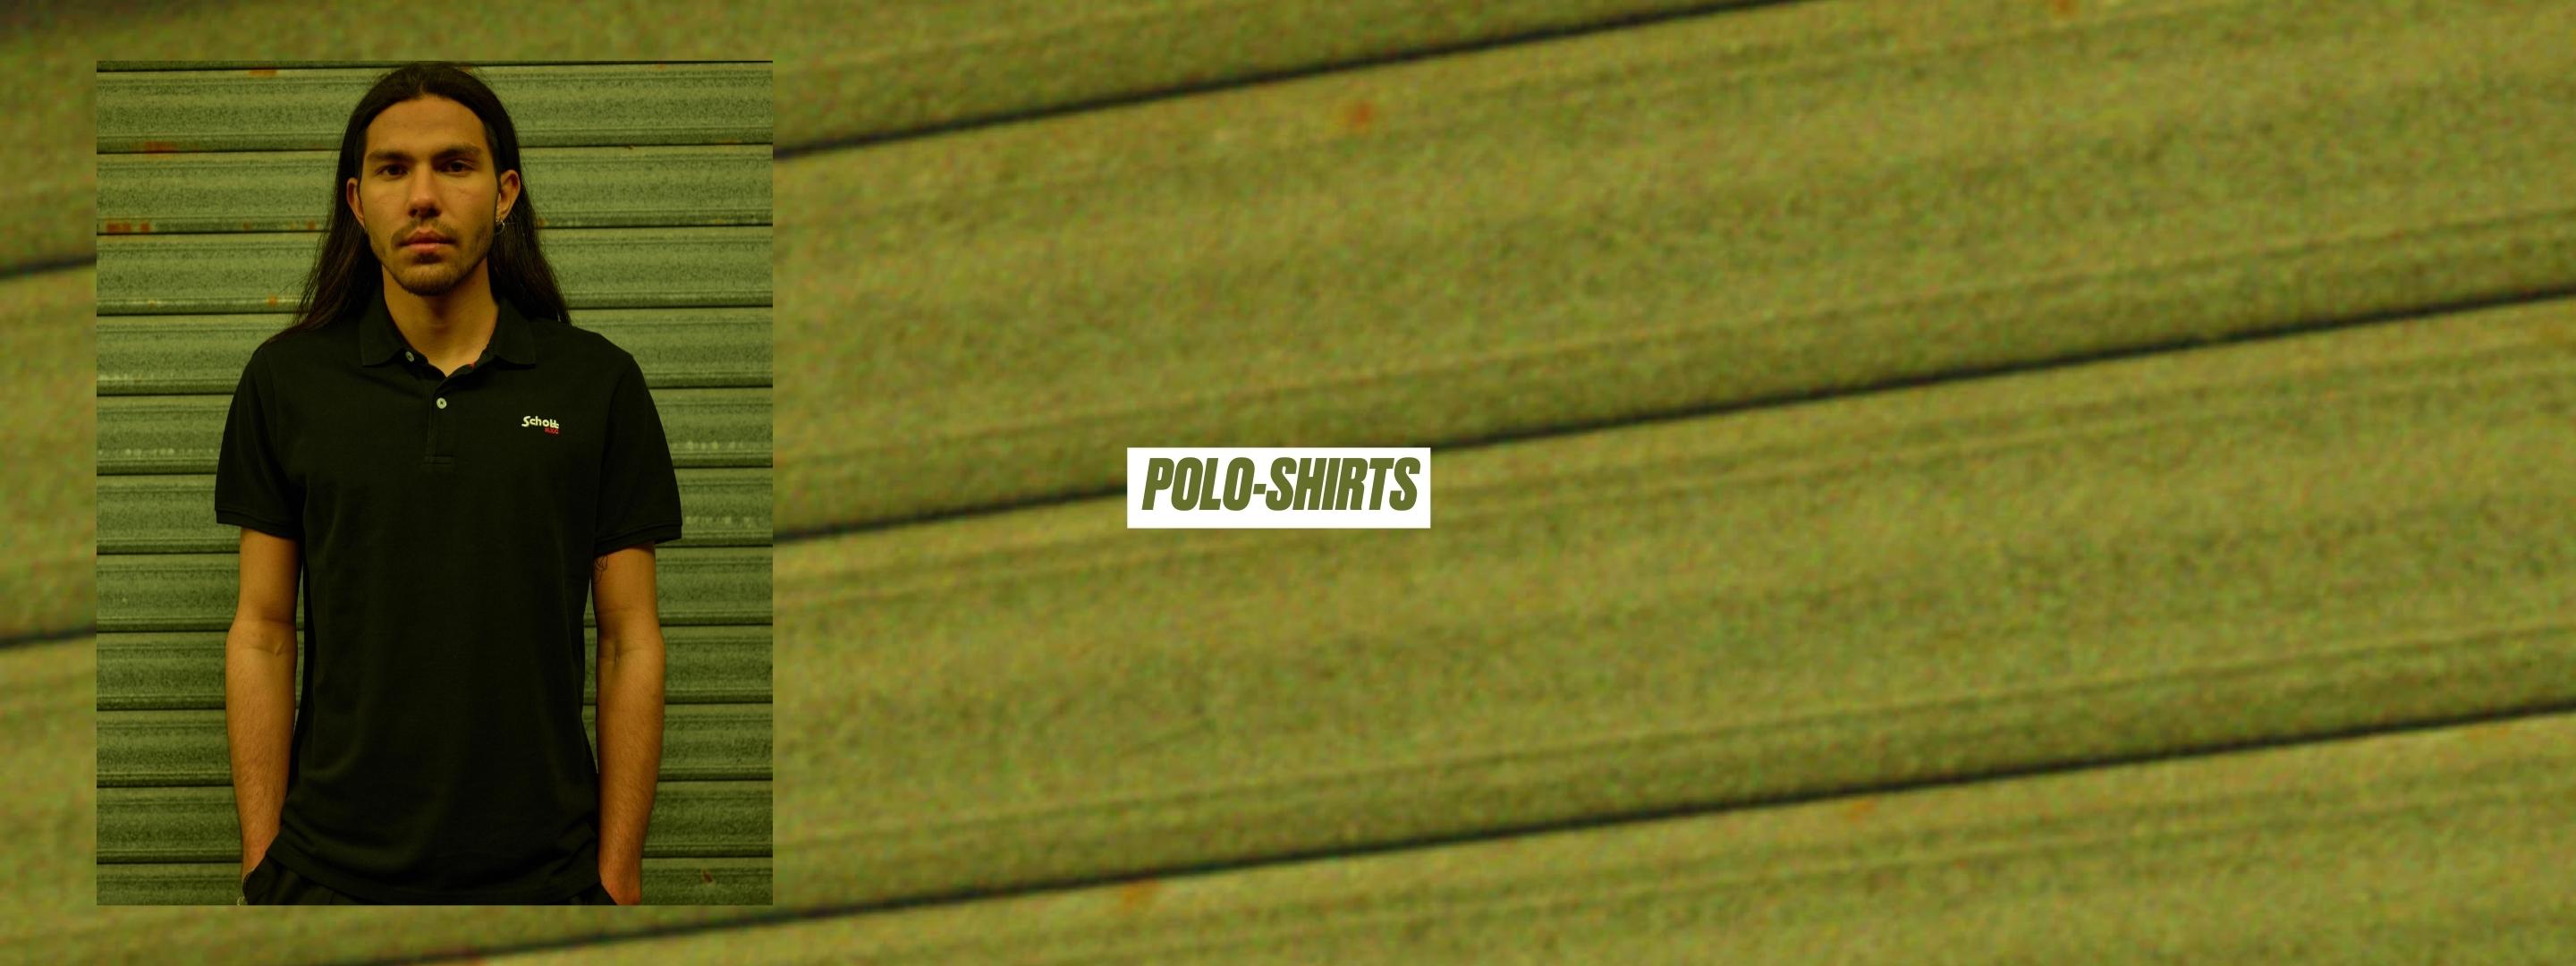 Polo-shirts & Tee-shirts